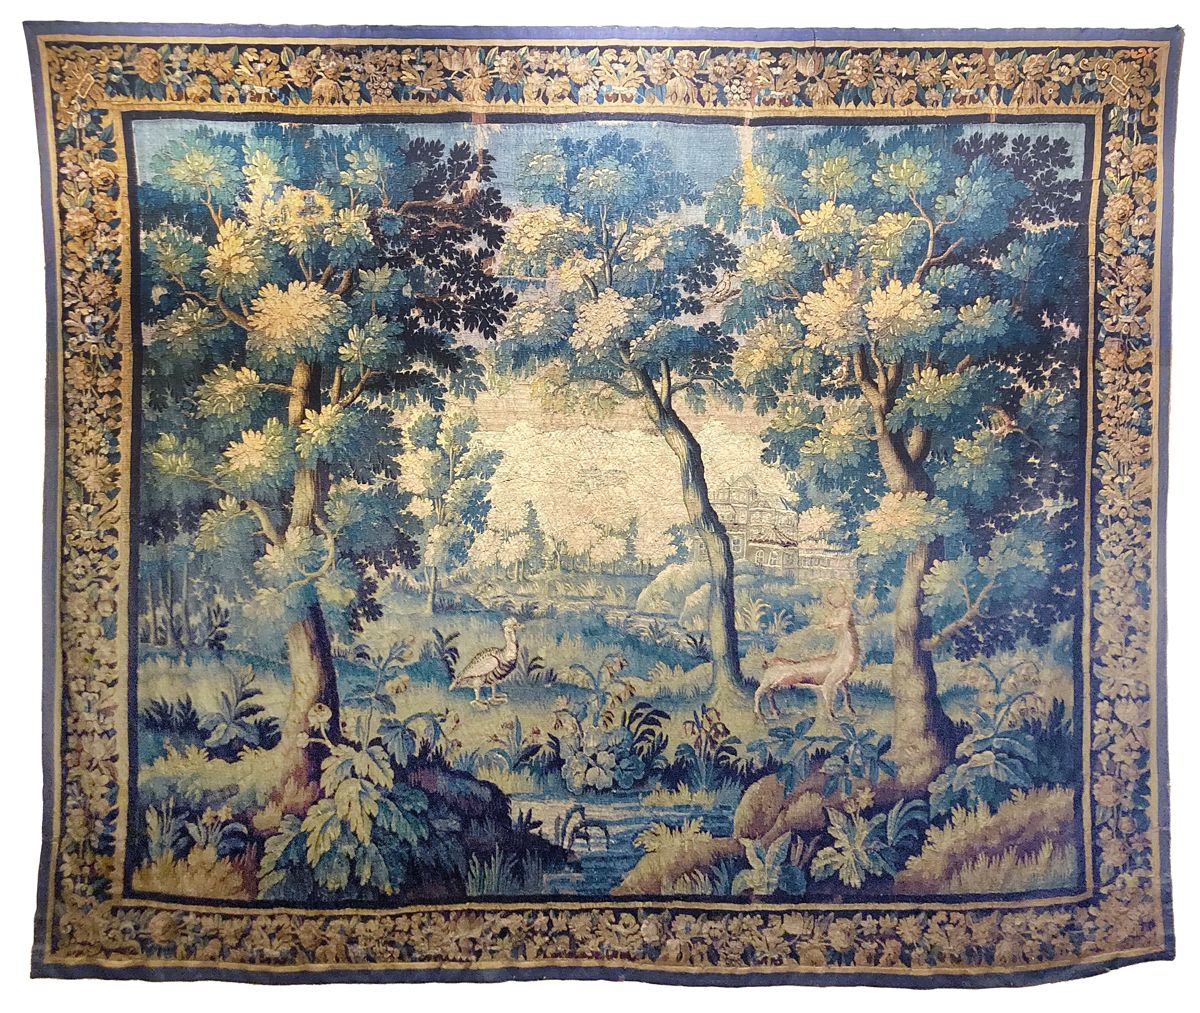 AUBUSSON, FRANCE 18ème SIECLE 重要的挂毯。
羊毛材质，描绘了河边城堡的公园里的动物场景。原有的花边。

尺寸：300 x 350厘&hellip;